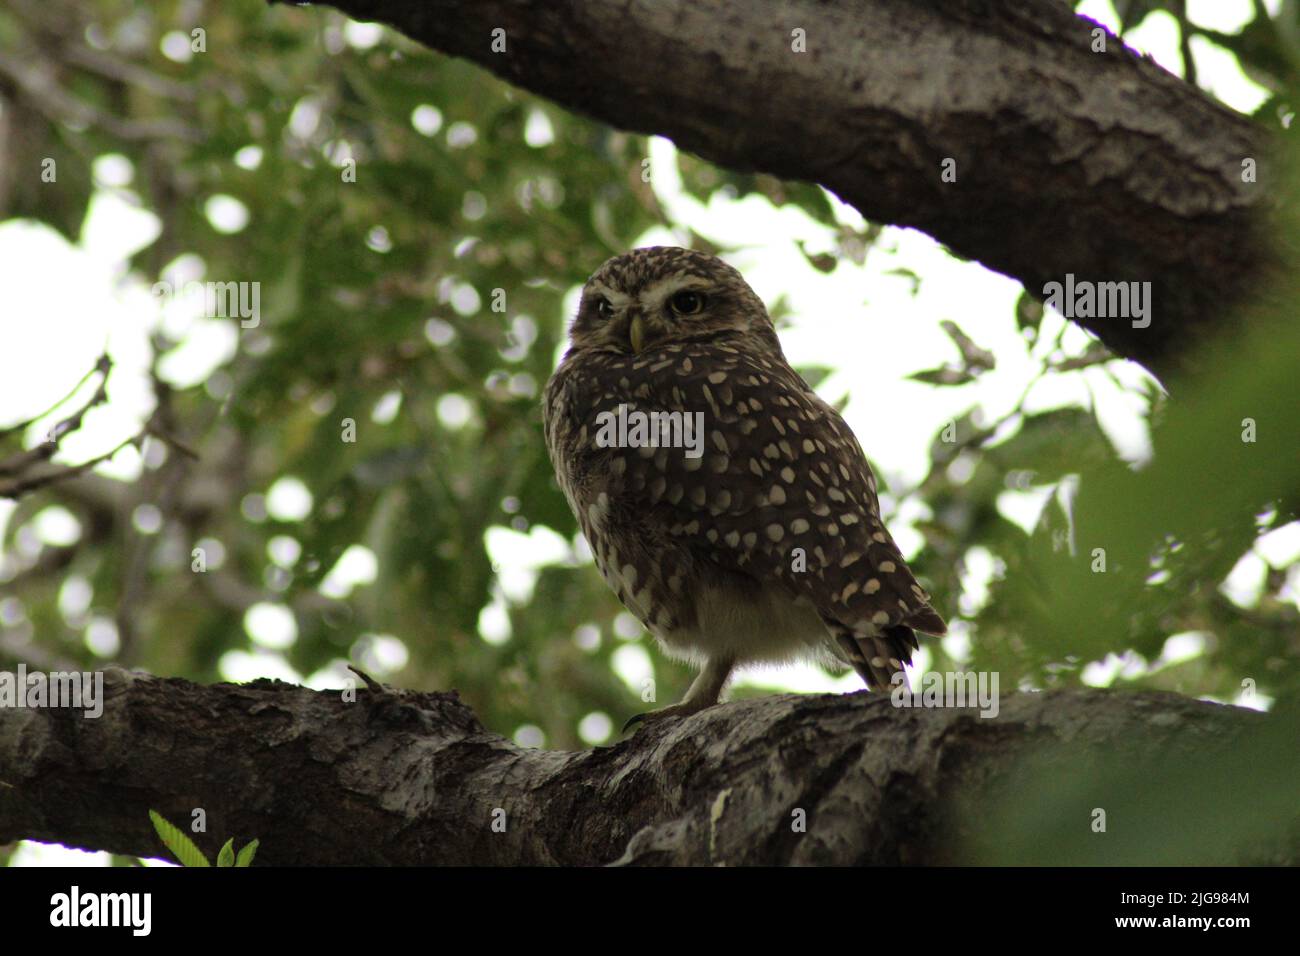 Owl on tree branch Stock Photo